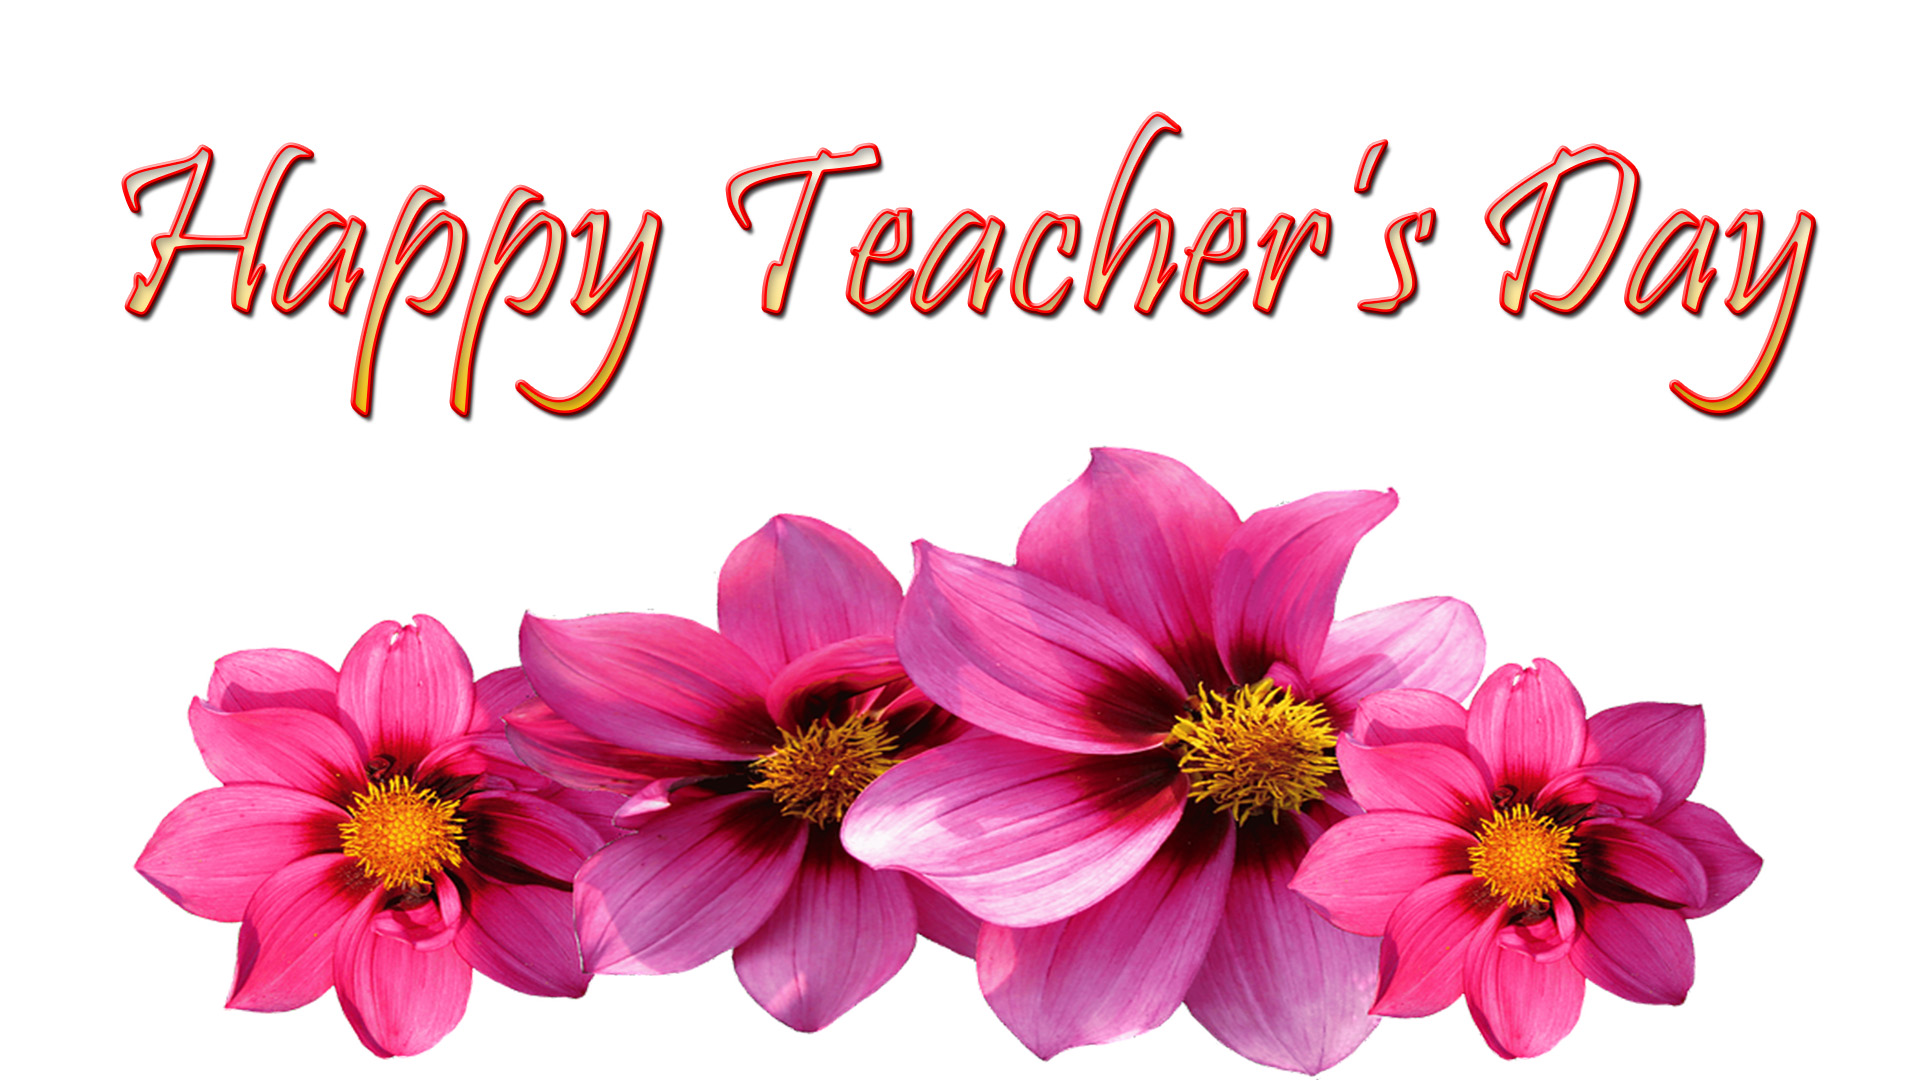 happy teachers day image hd